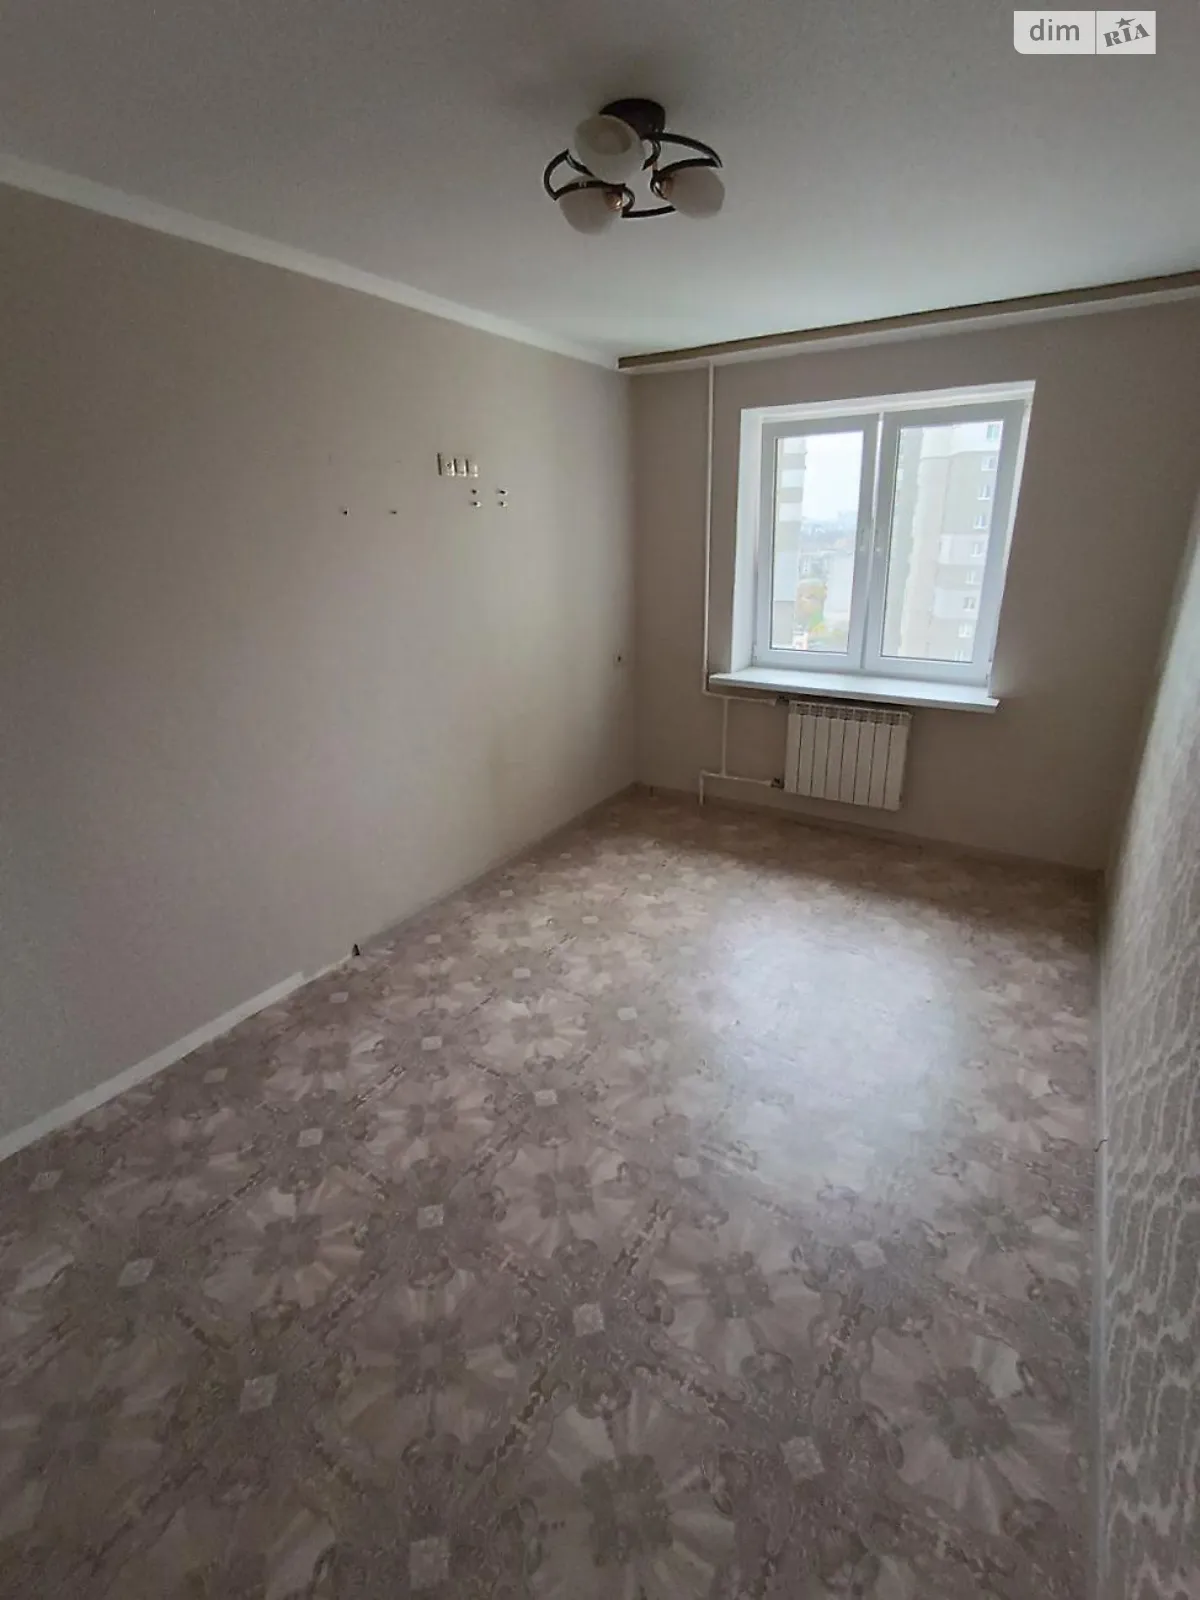 Продается комната 110 кв. м в Киеве, цена: 14500 $ - фото 1